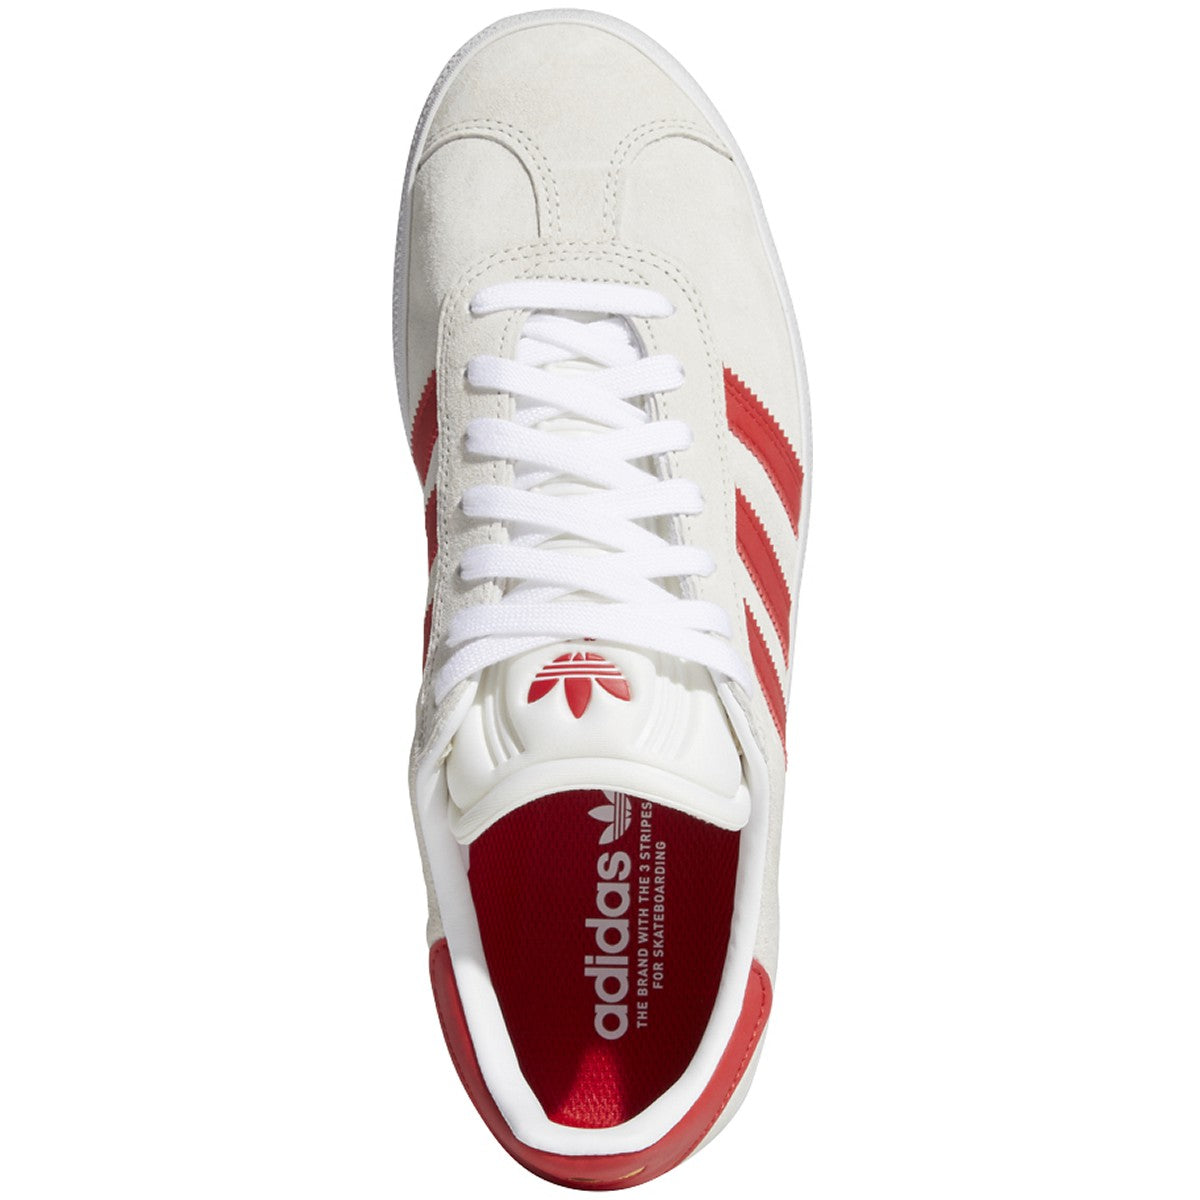 White/Scarlet Red Gazelle ADV Adidas Skateboarding Shoe Top